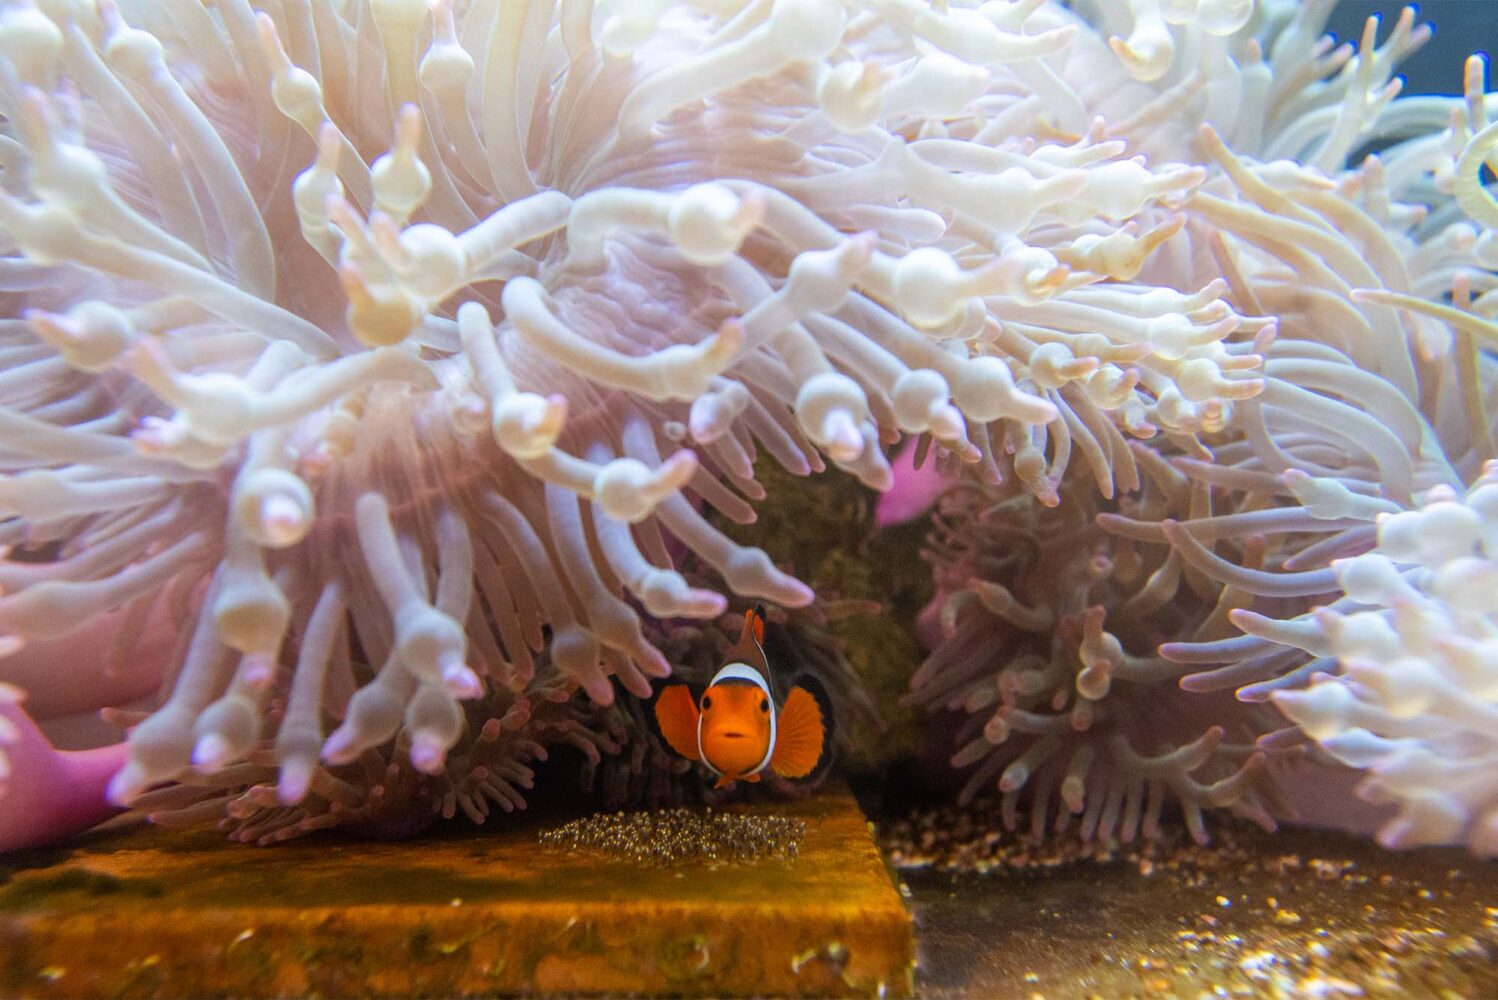 Photo: A clownfish hiding beneath a sea anemone